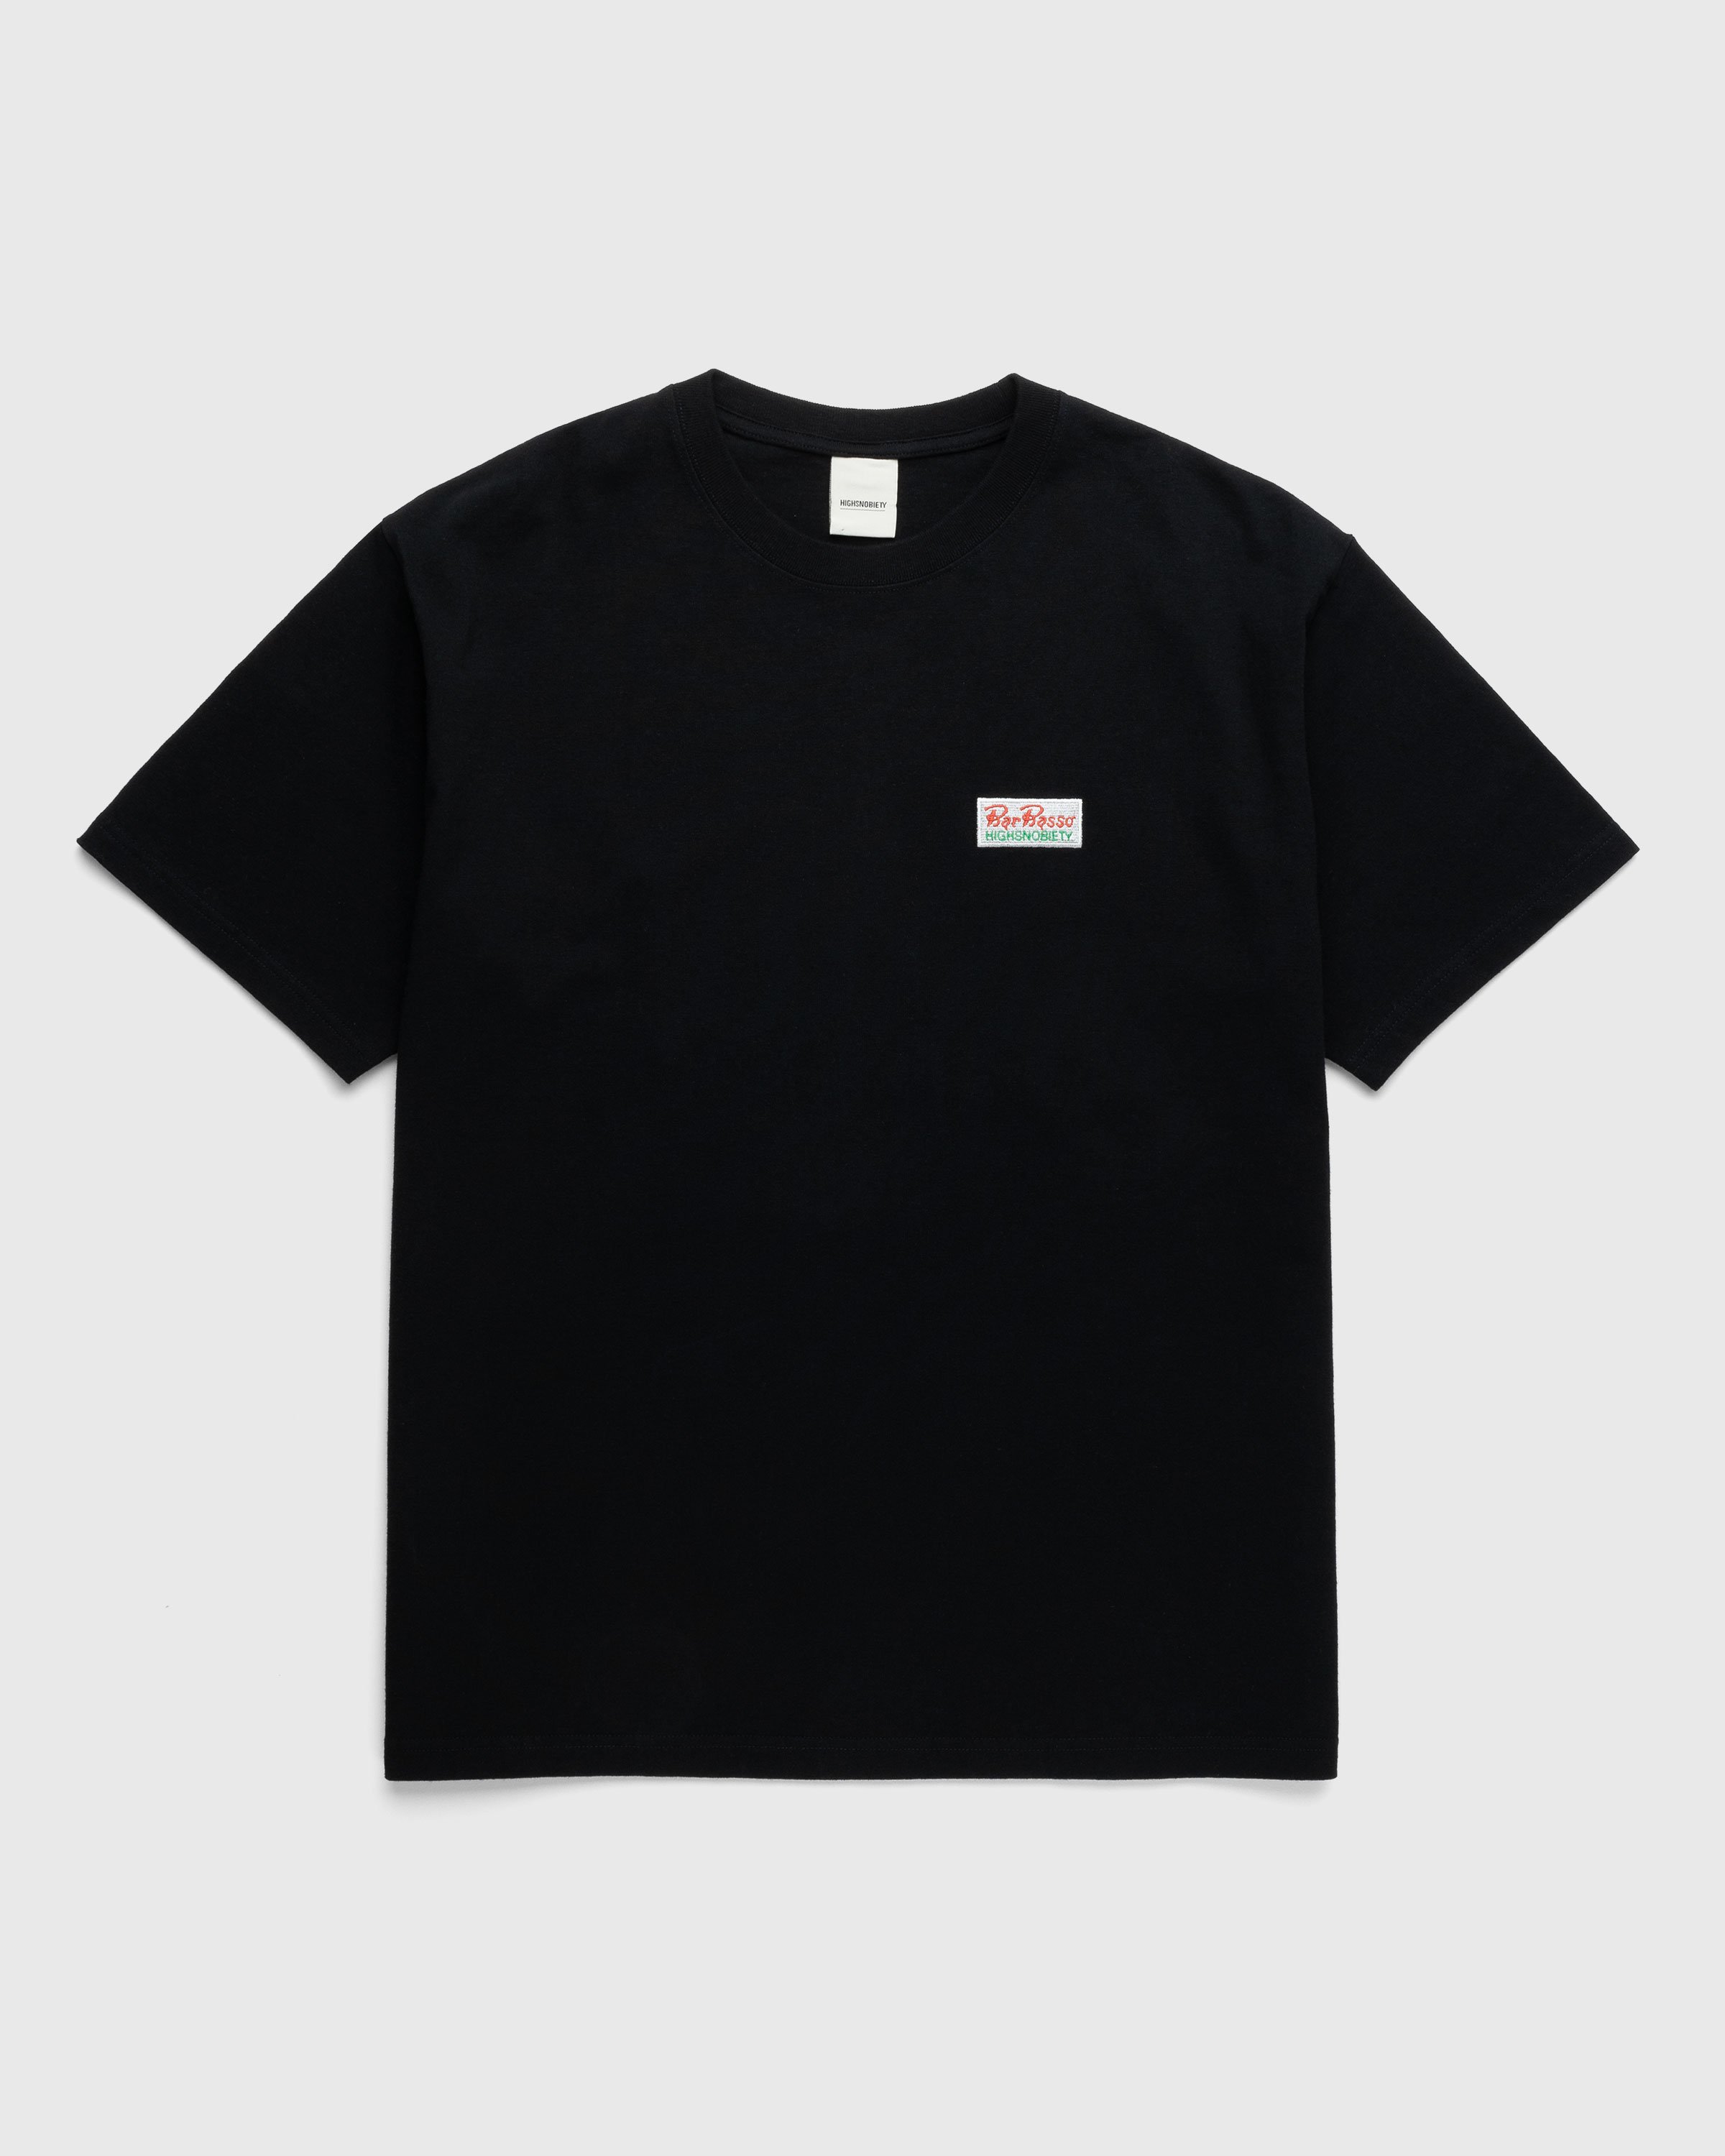 Bar Basso x Highsnobiety - Sbagliato T-Shirt Black - Clothing - Black - Image 2